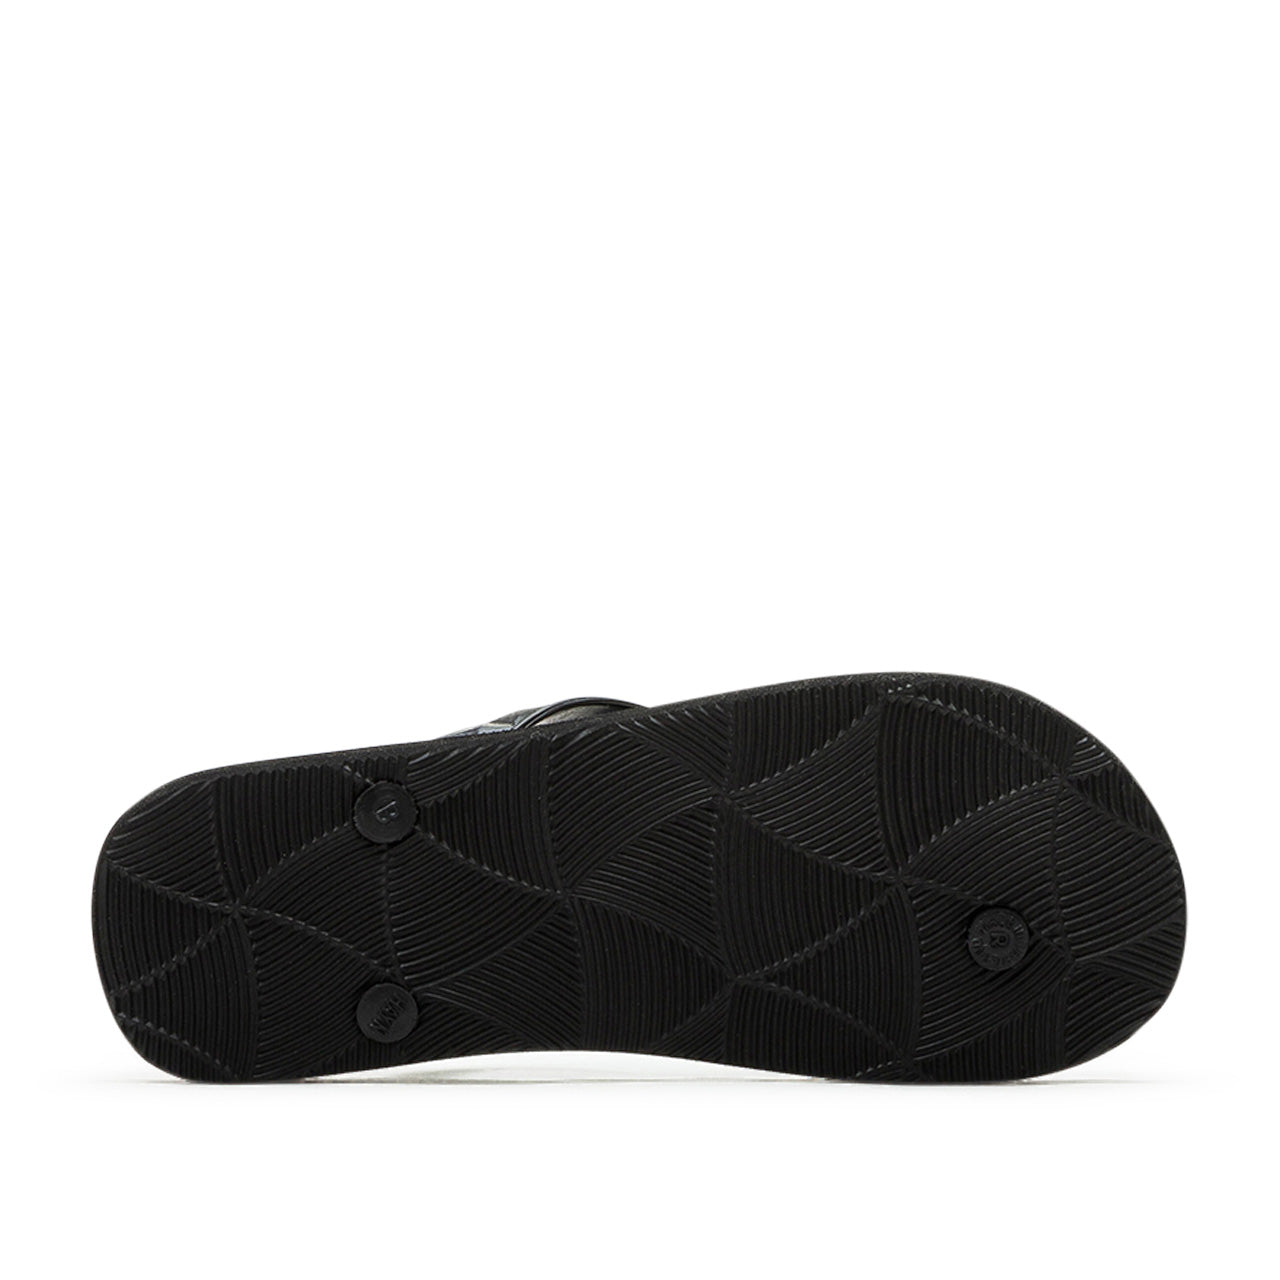 wacko maria hayn beach sandals (type-1) (black)